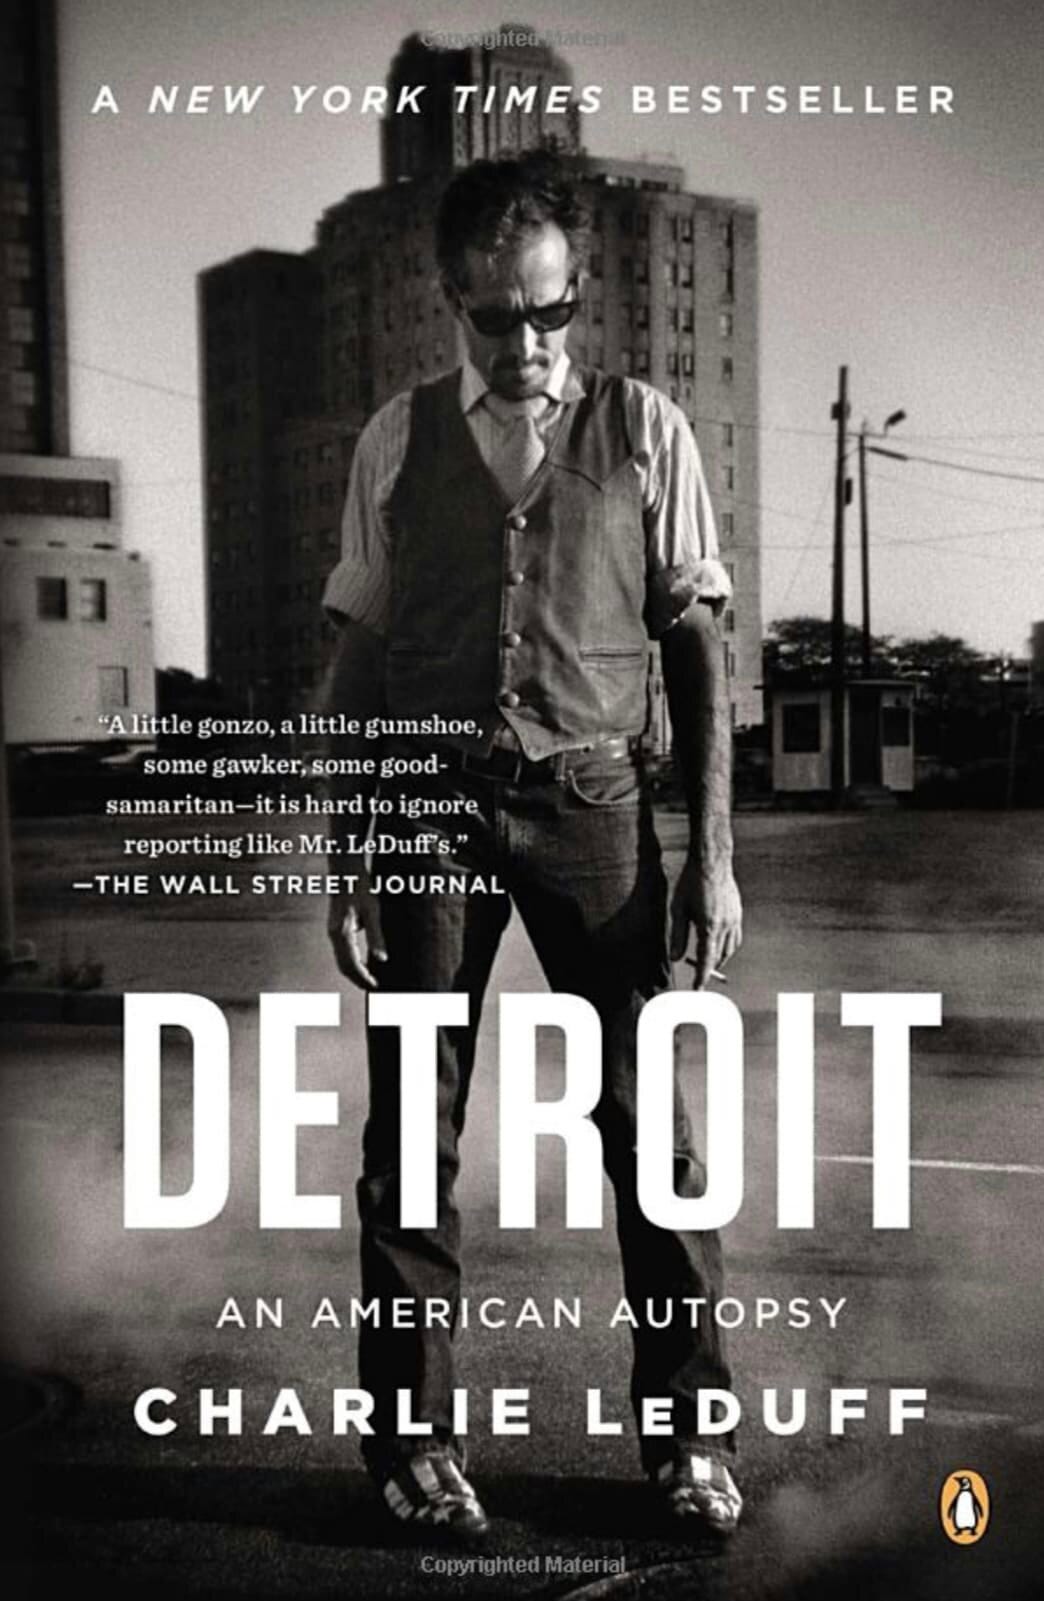 Detroit: An American Autopsy, by Charlie LeDuff